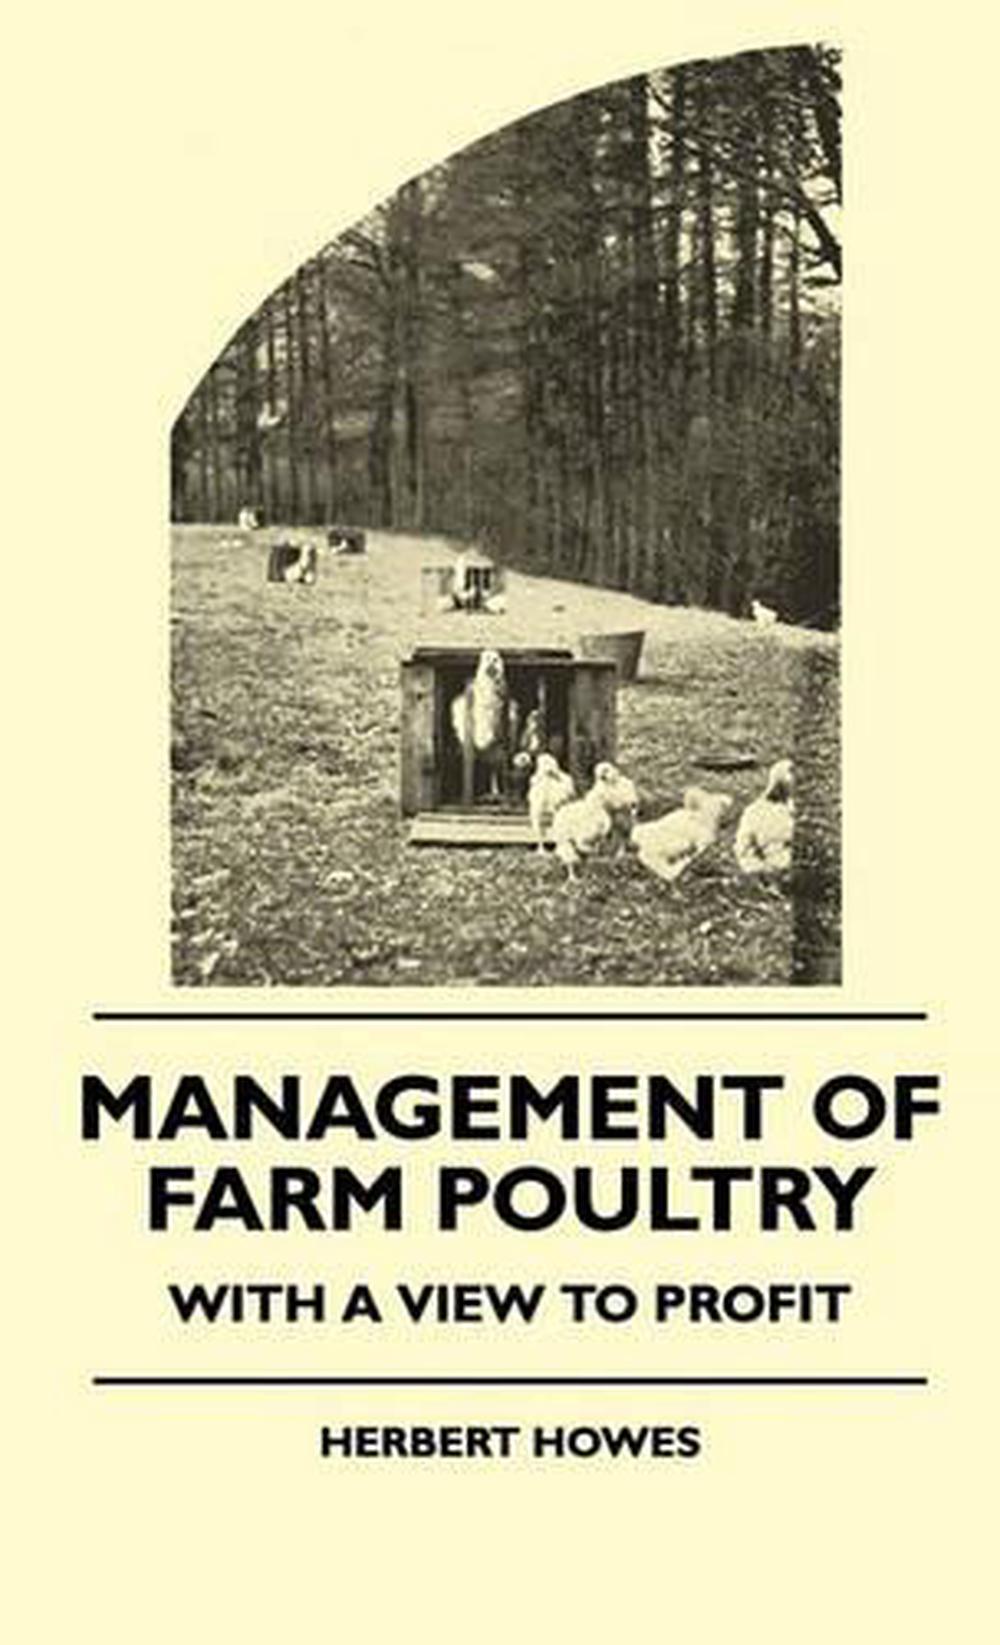 profit in poultry farm business